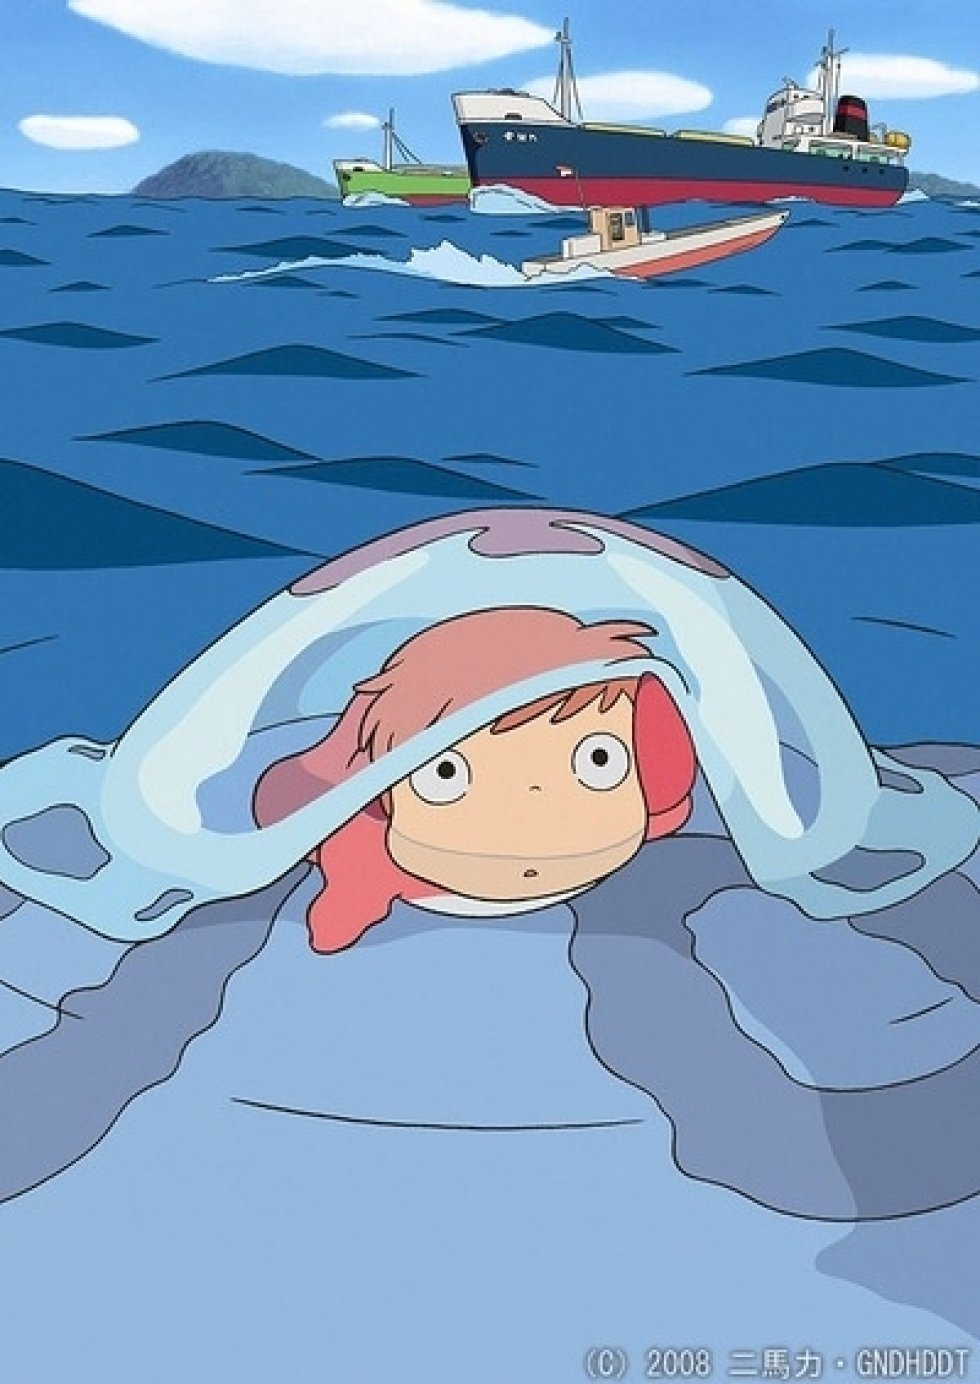 Ponyo on the cliff by the sea - Studio Ghibli - Hayao Miyazaki